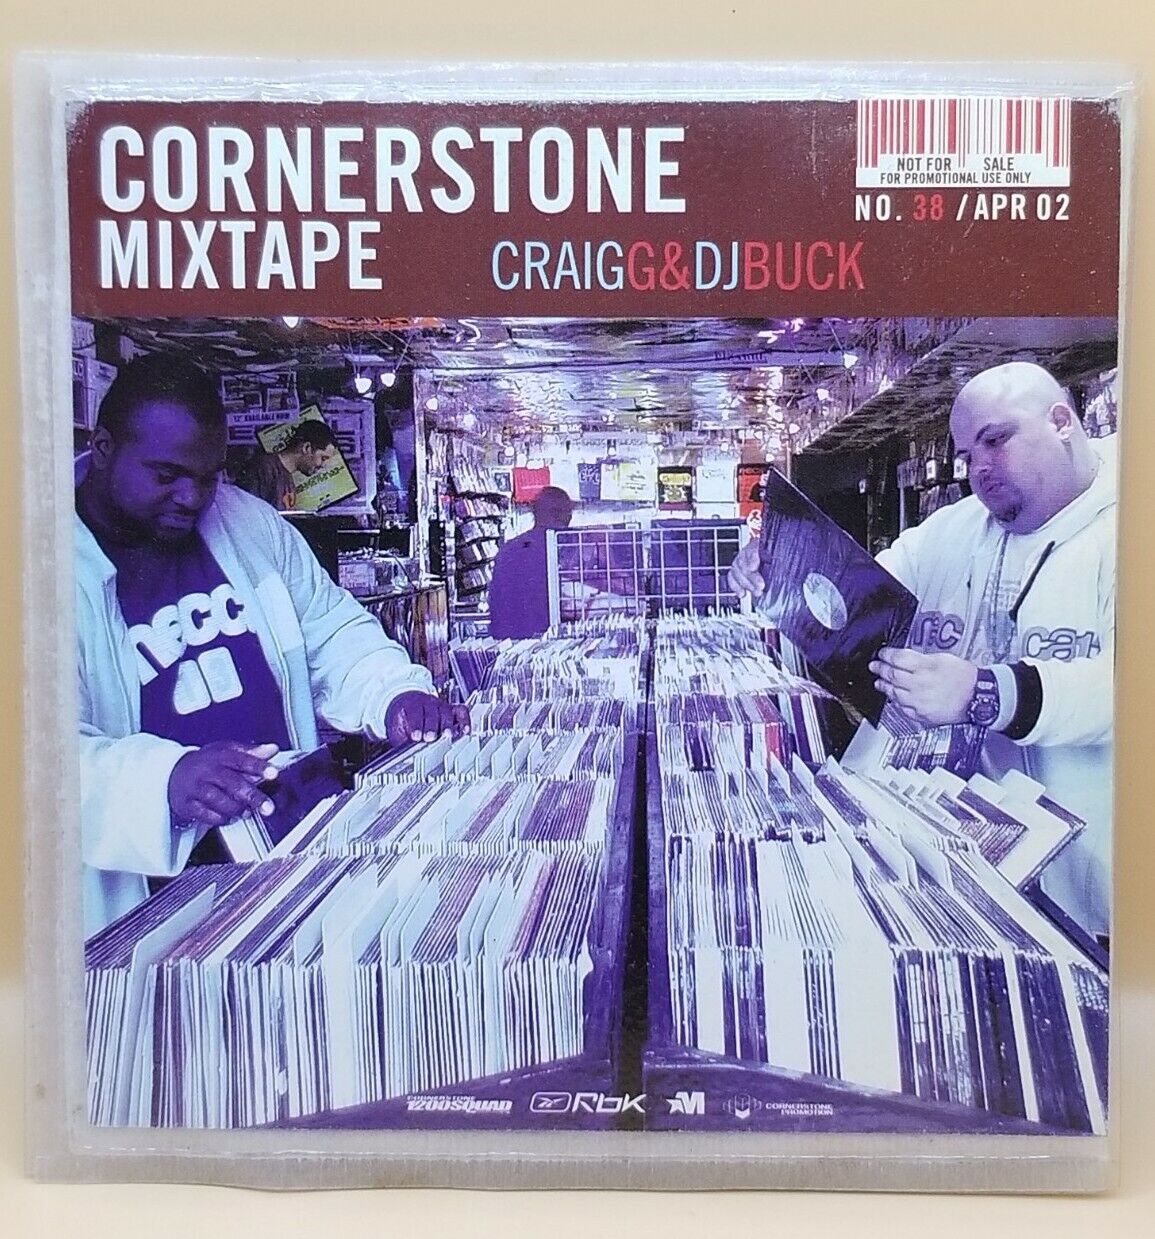 CORNERSTONE MIXTAPE #38 APRIL 2002 2X CD MIXED PROMO 49 TRACKS CRAIG G, DJ BUCK